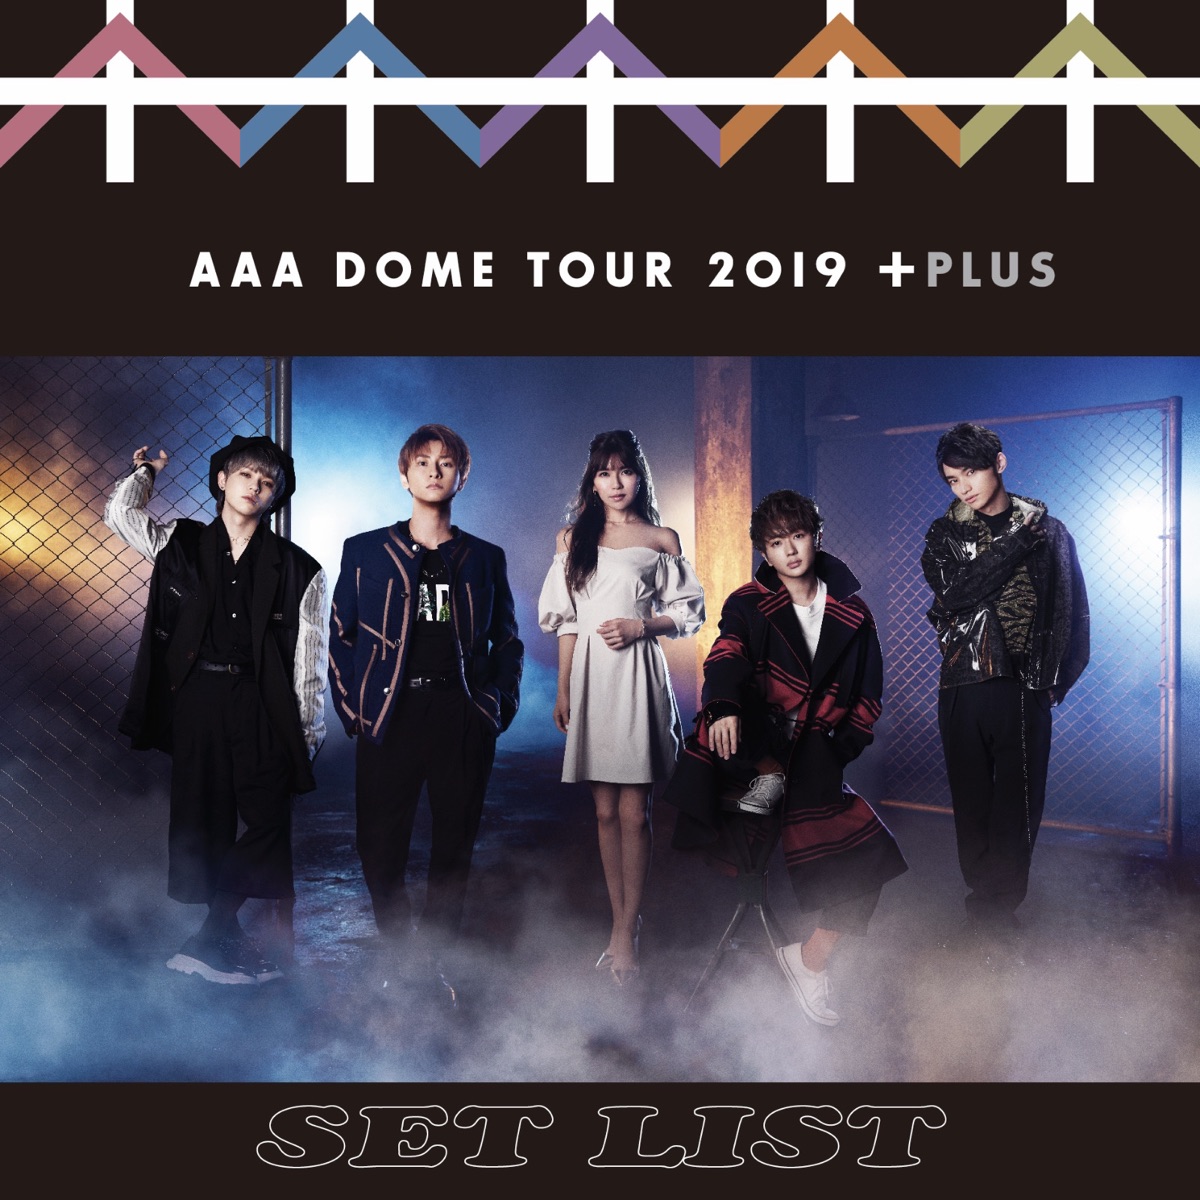 aaa dome tour 2019